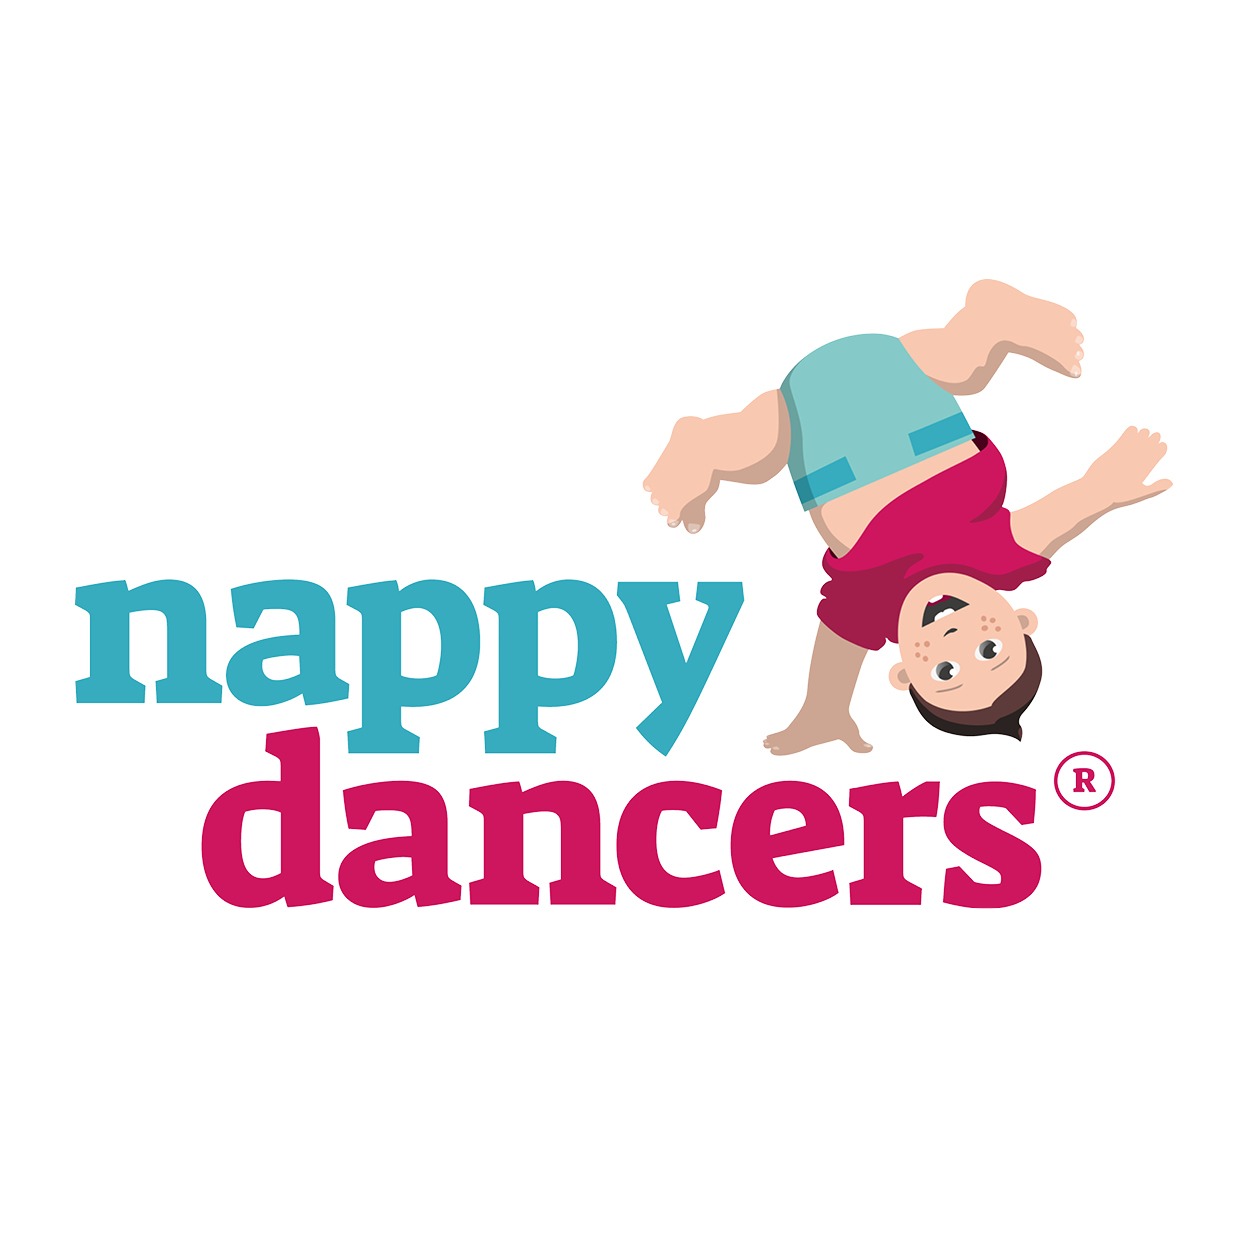 nappydancers